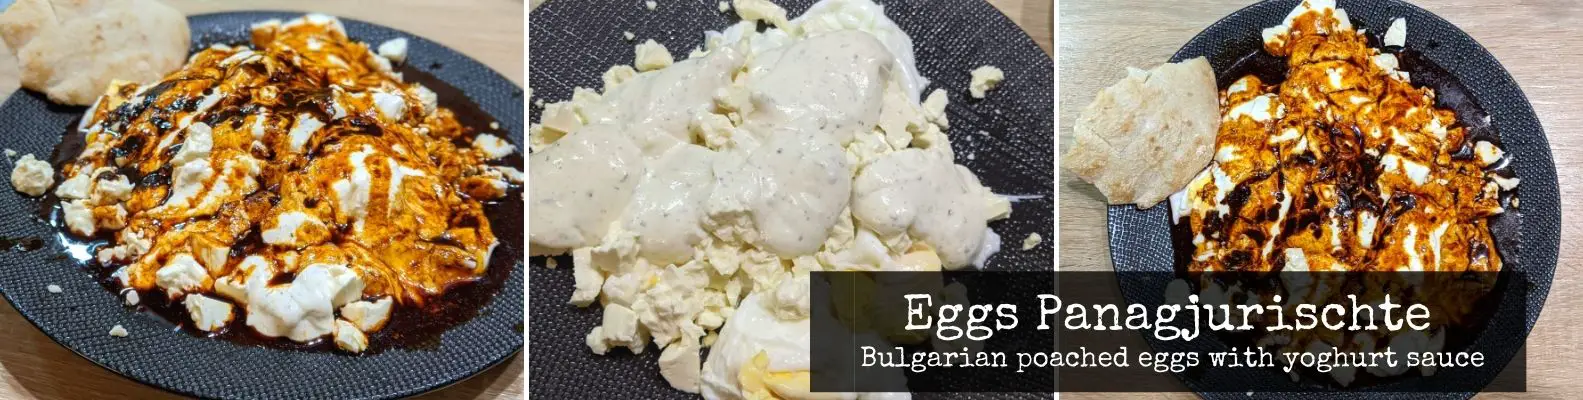 Eggs Panagjurischte - Bulgarian poached eggs with yogurt sauce